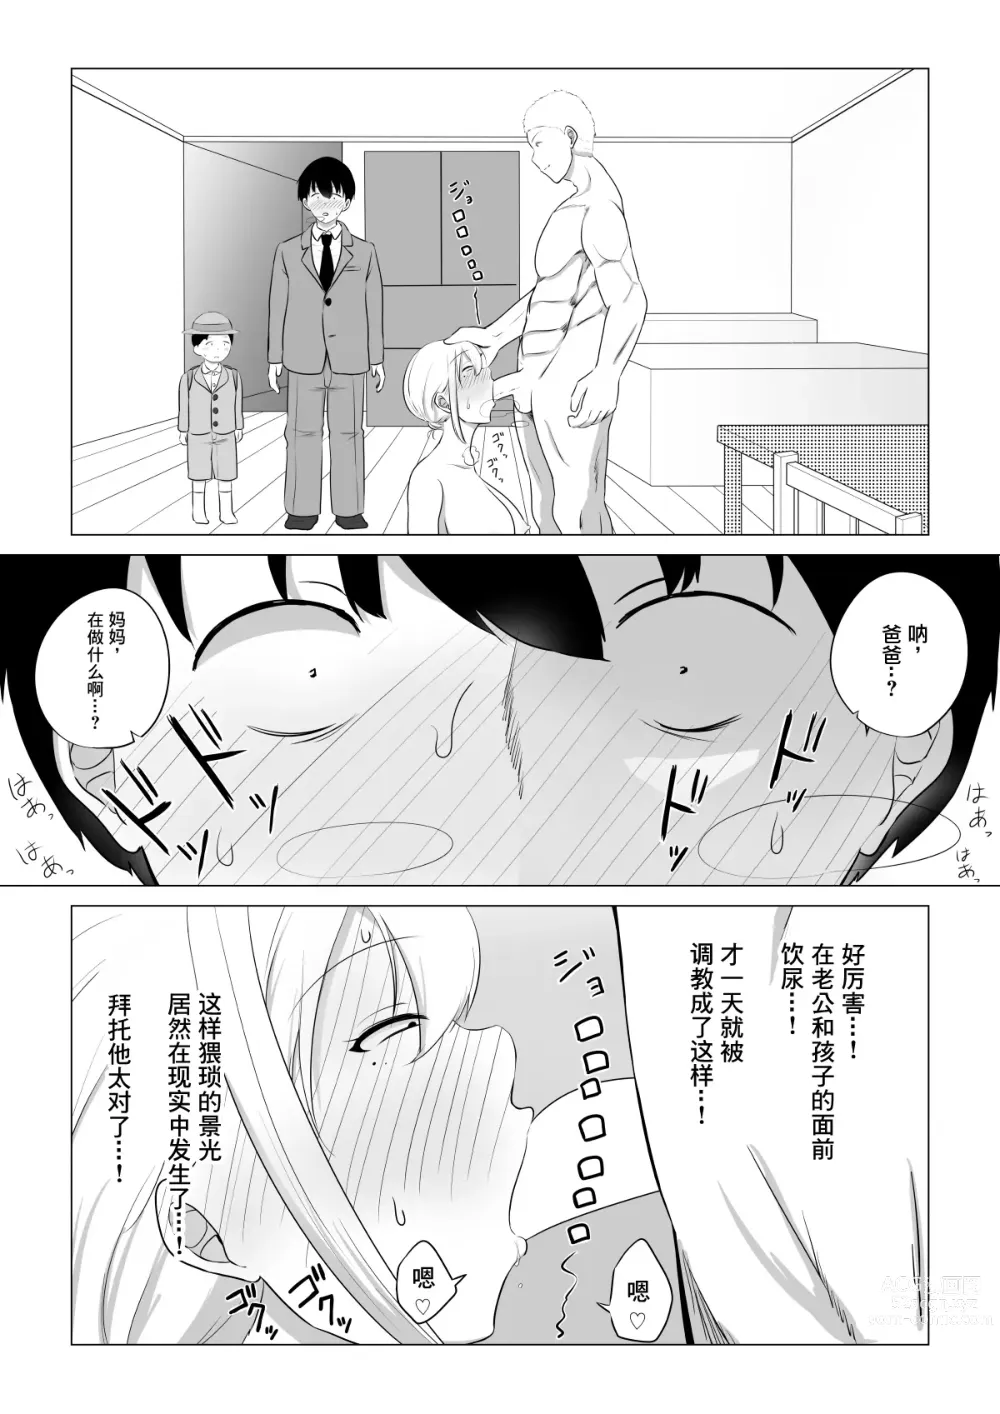 Page 21 of doujinshi 爱妻被绿事件簿